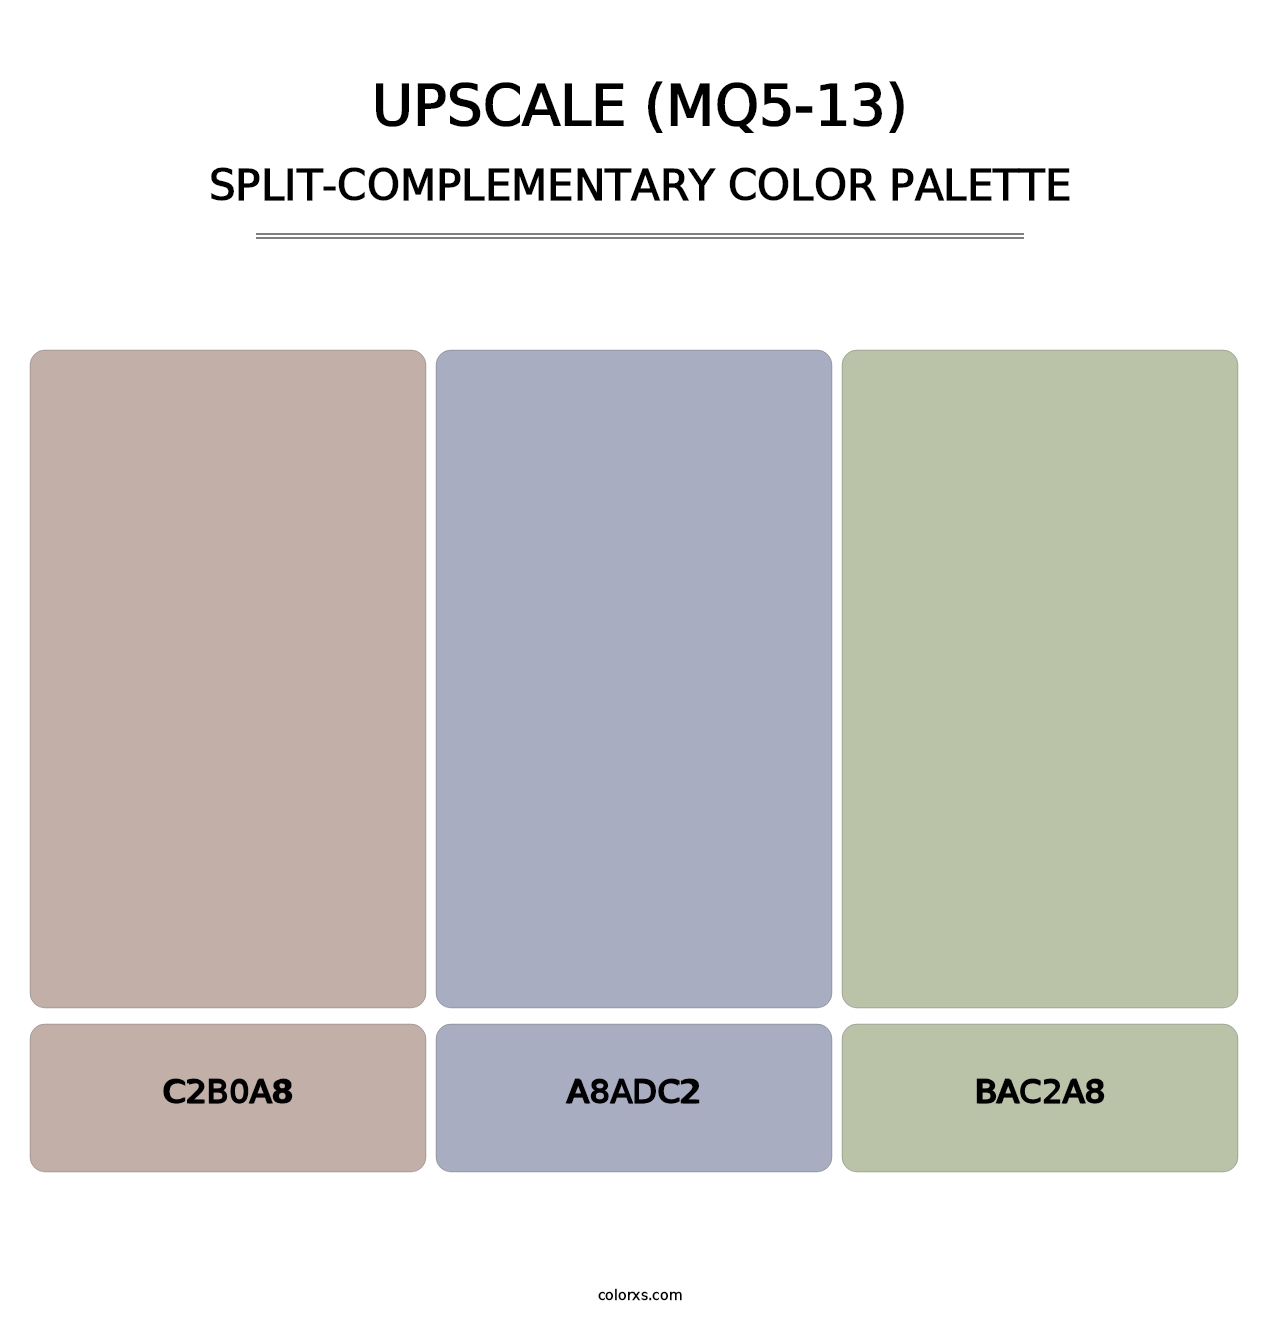 Upscale (MQ5-13) - Split-Complementary Color Palette